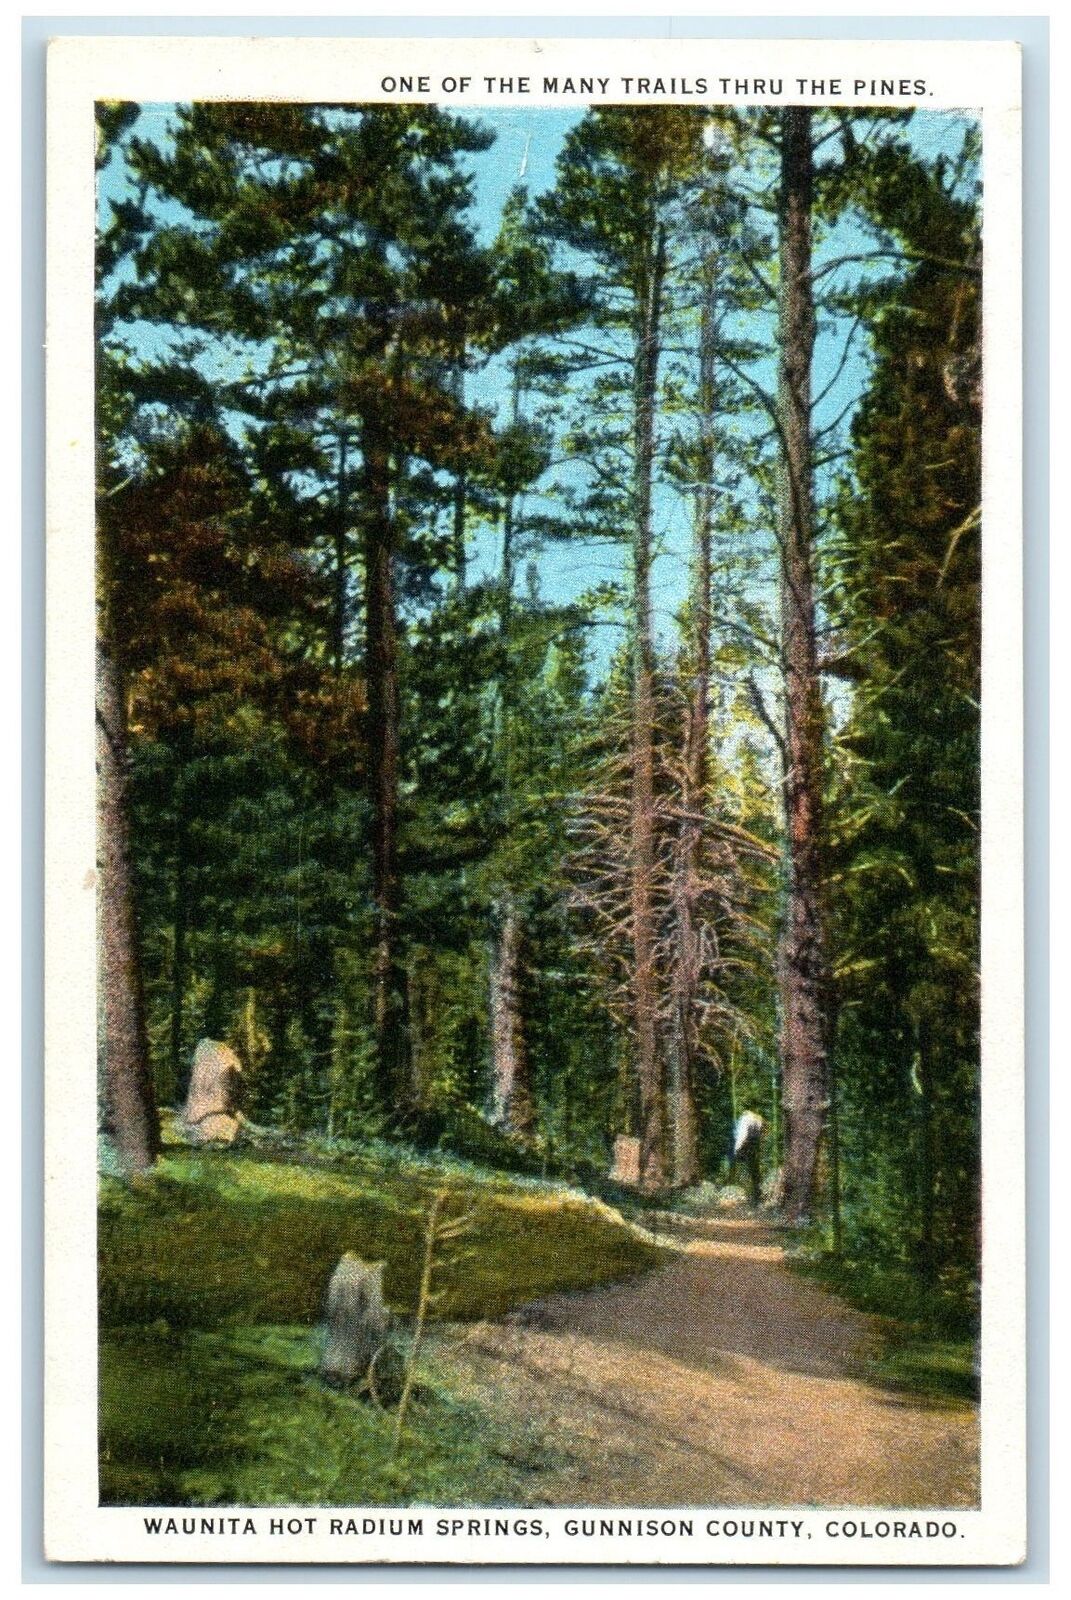 c1920 Waunita Hot Radium Springs Trails Pines Gunnison County Colorado Postcard